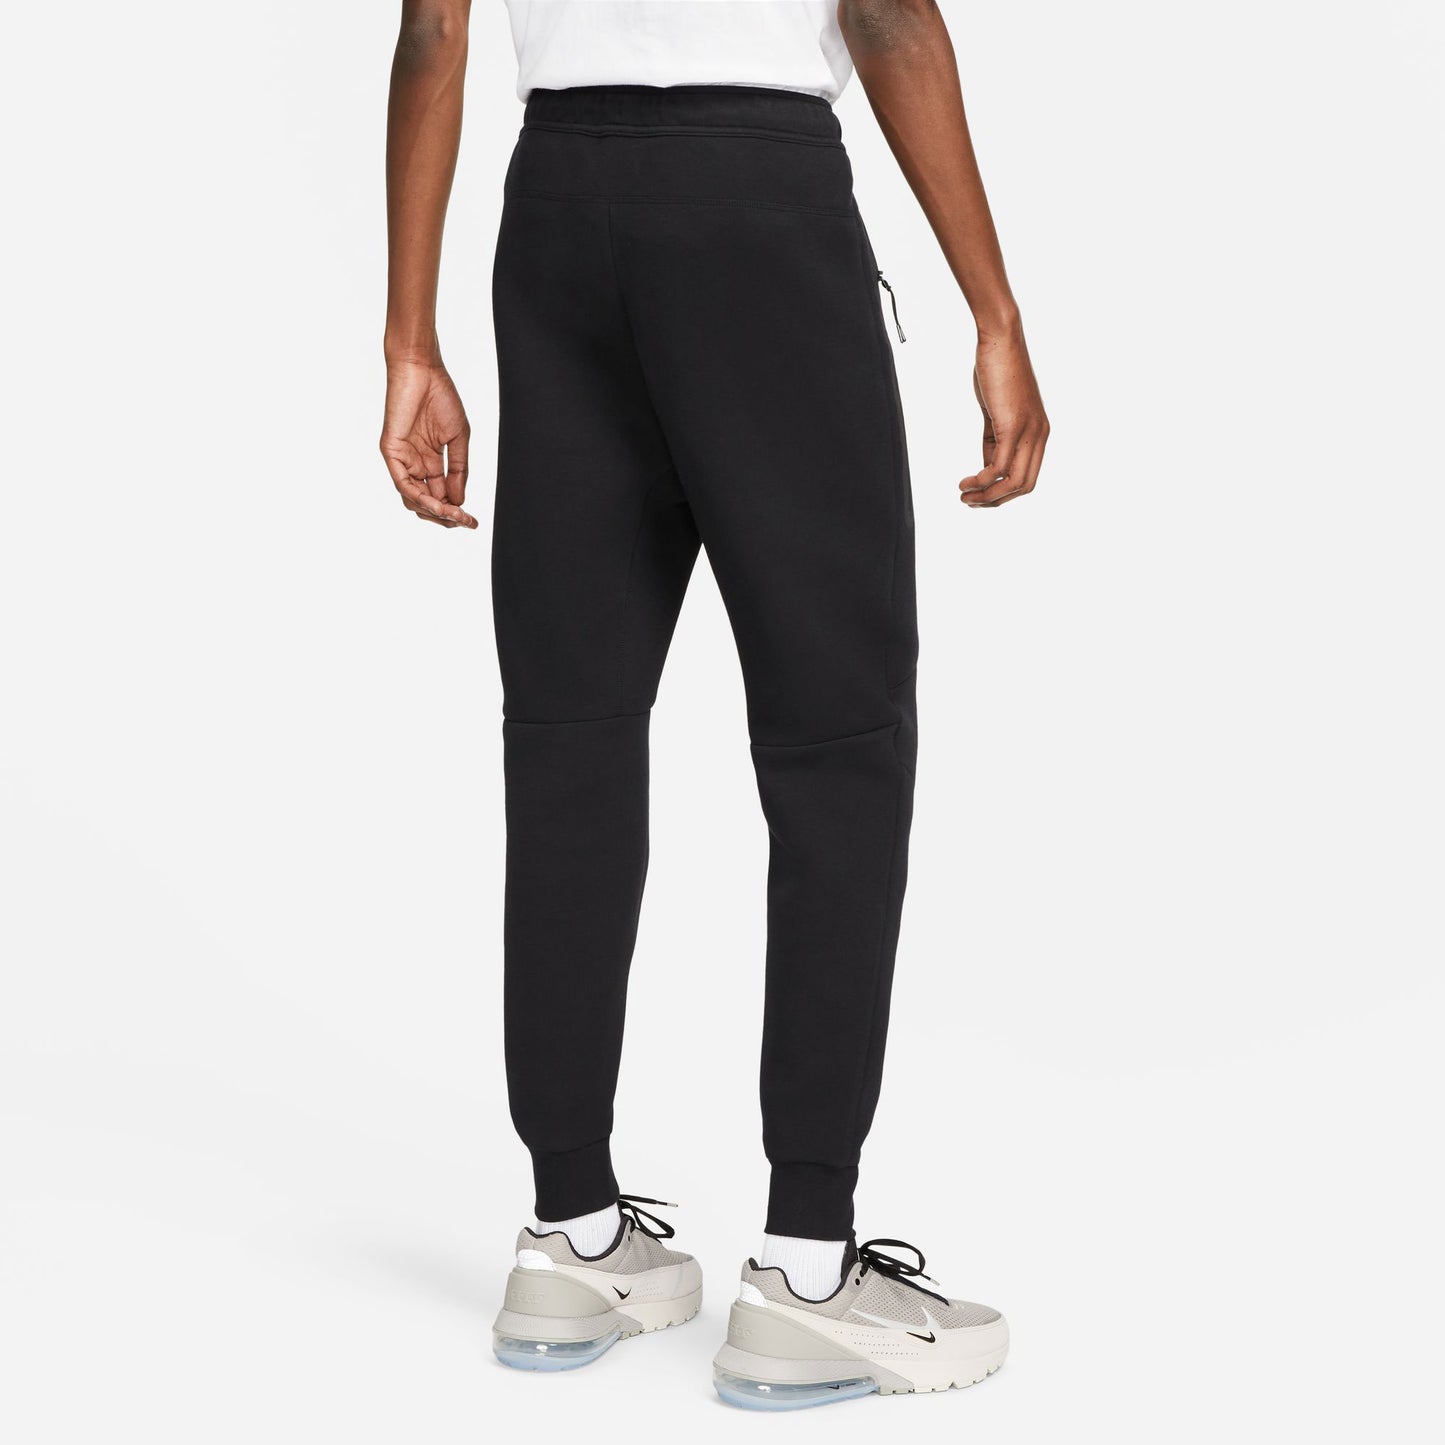 Nike Tech Fleece Men's Pants Black (2)